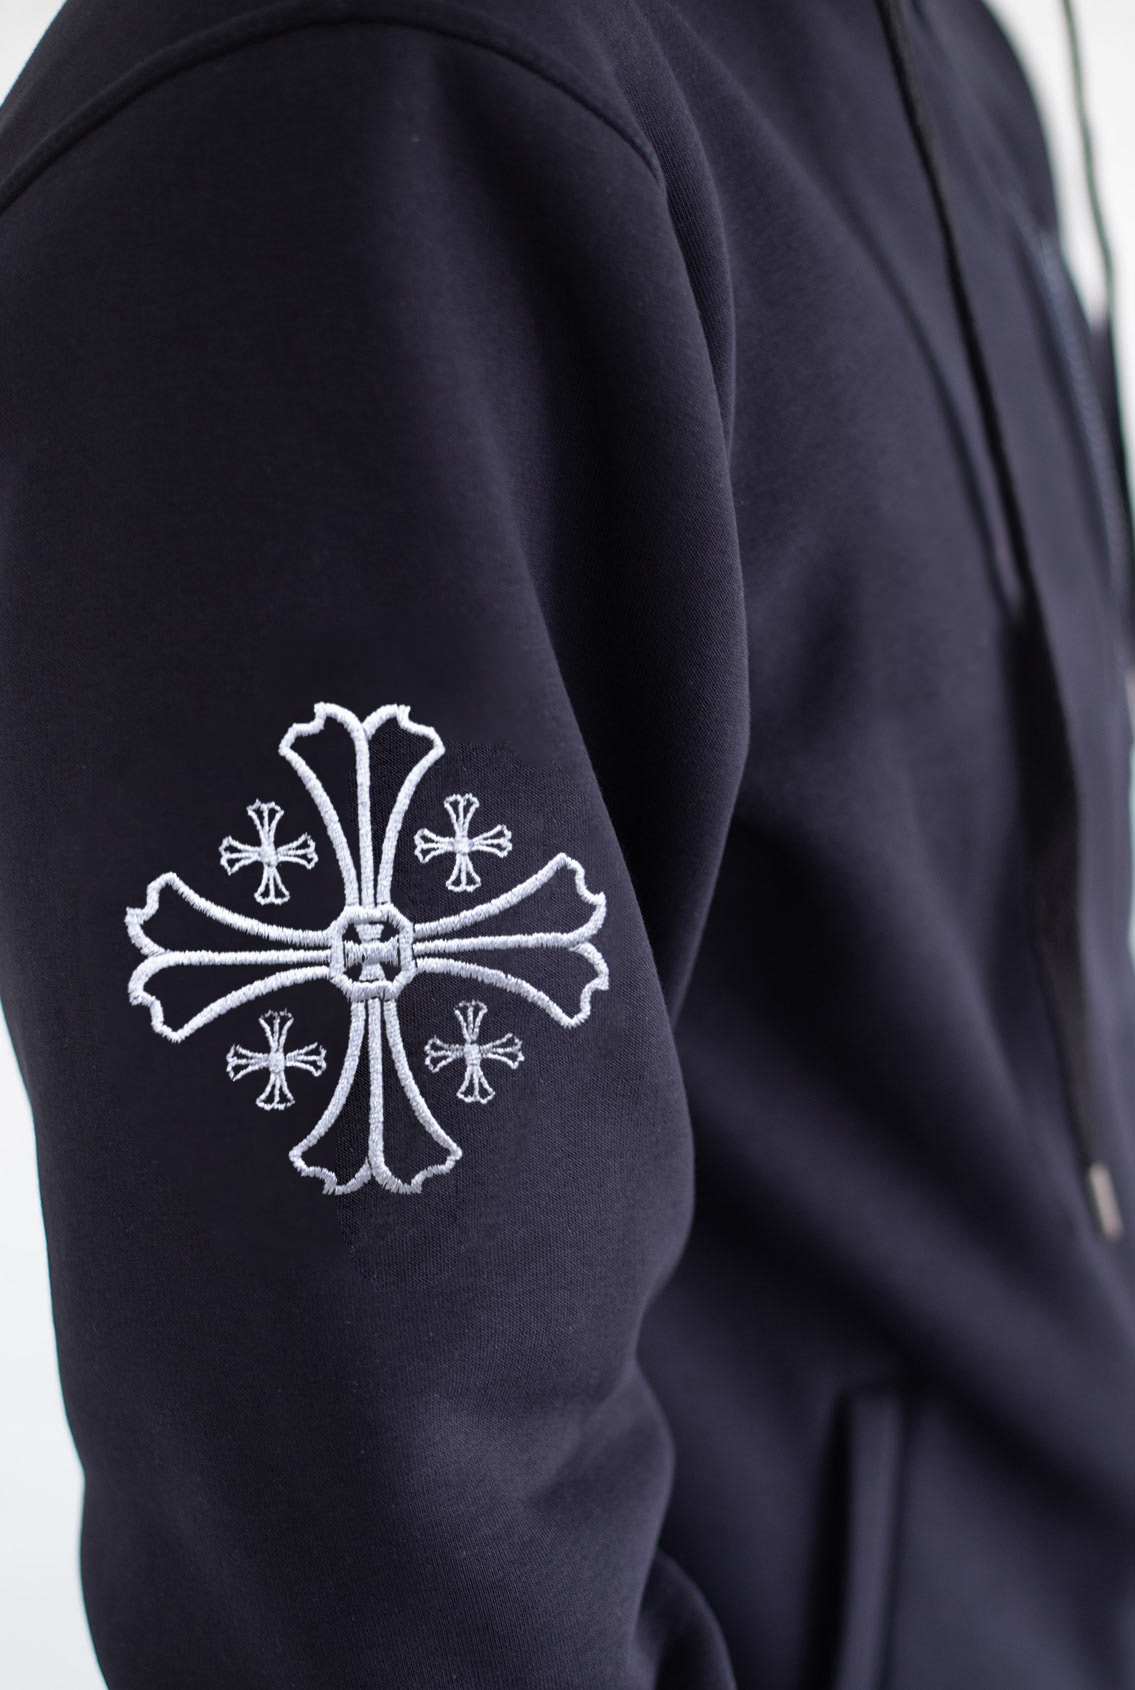 sweatshirt with embroidered cross